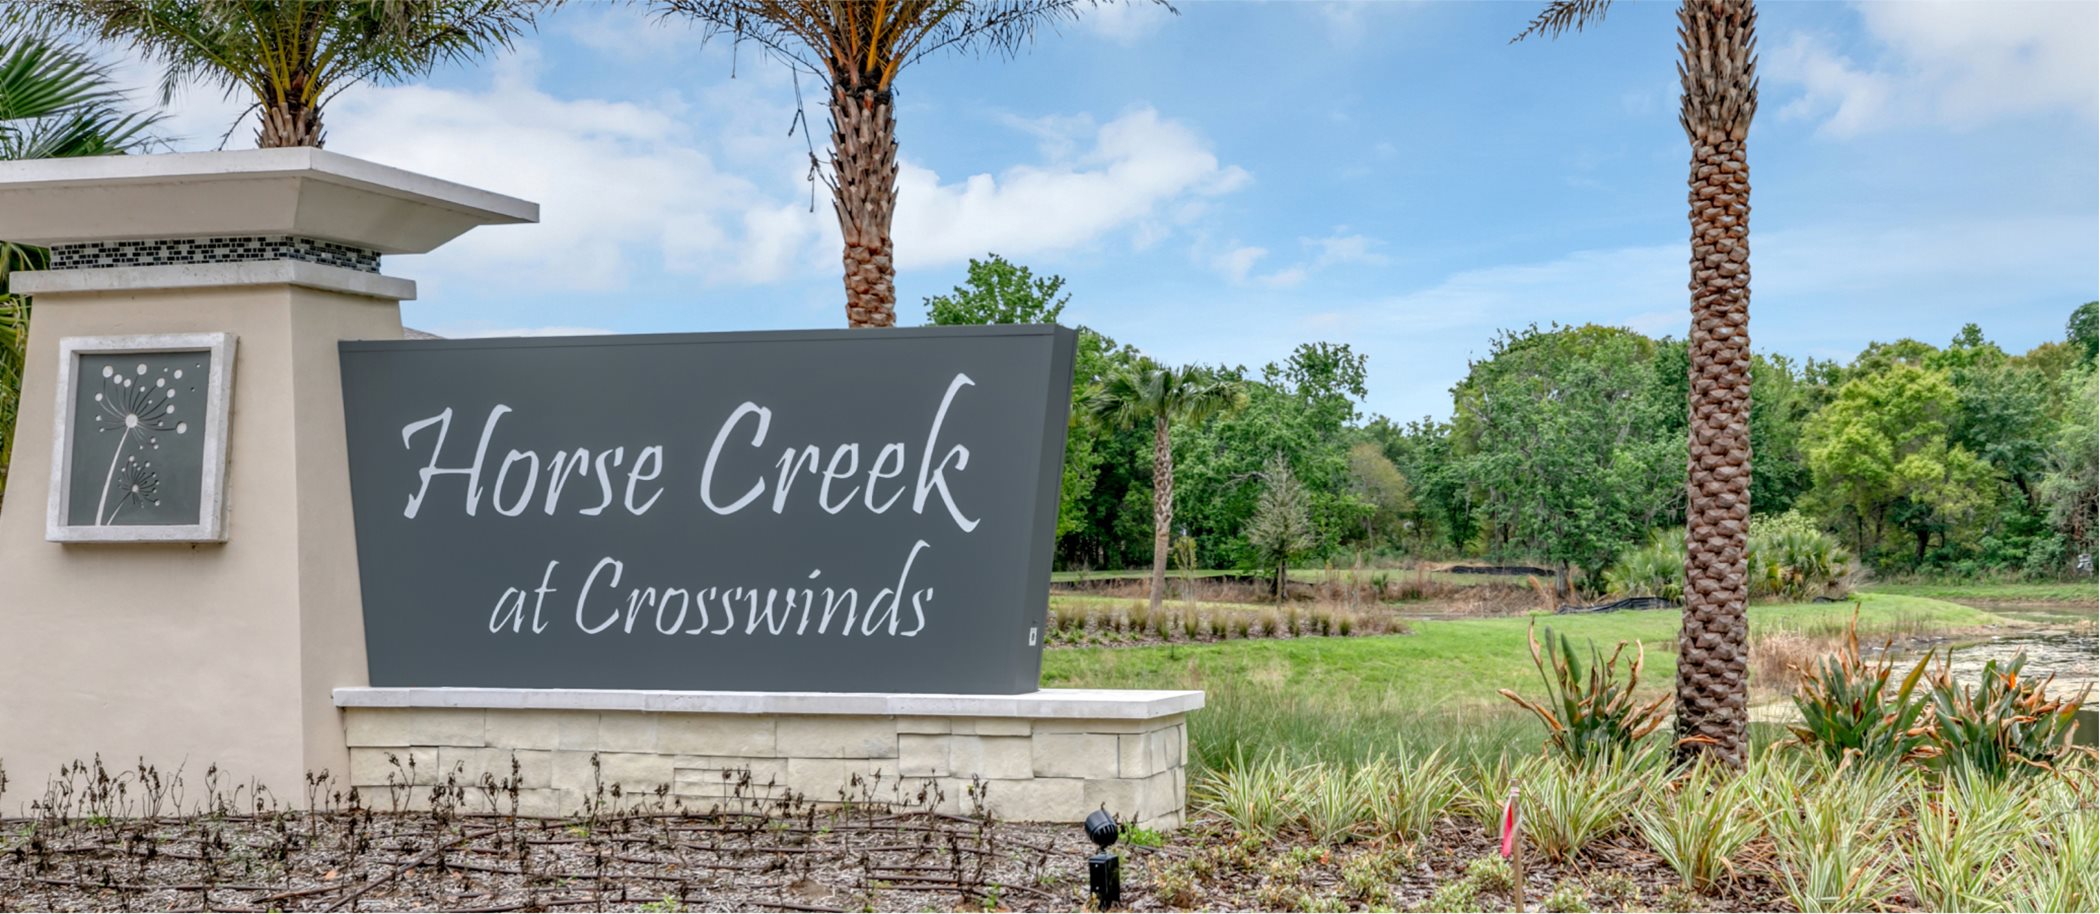 Horse Creek at Crosswinds Community Monument